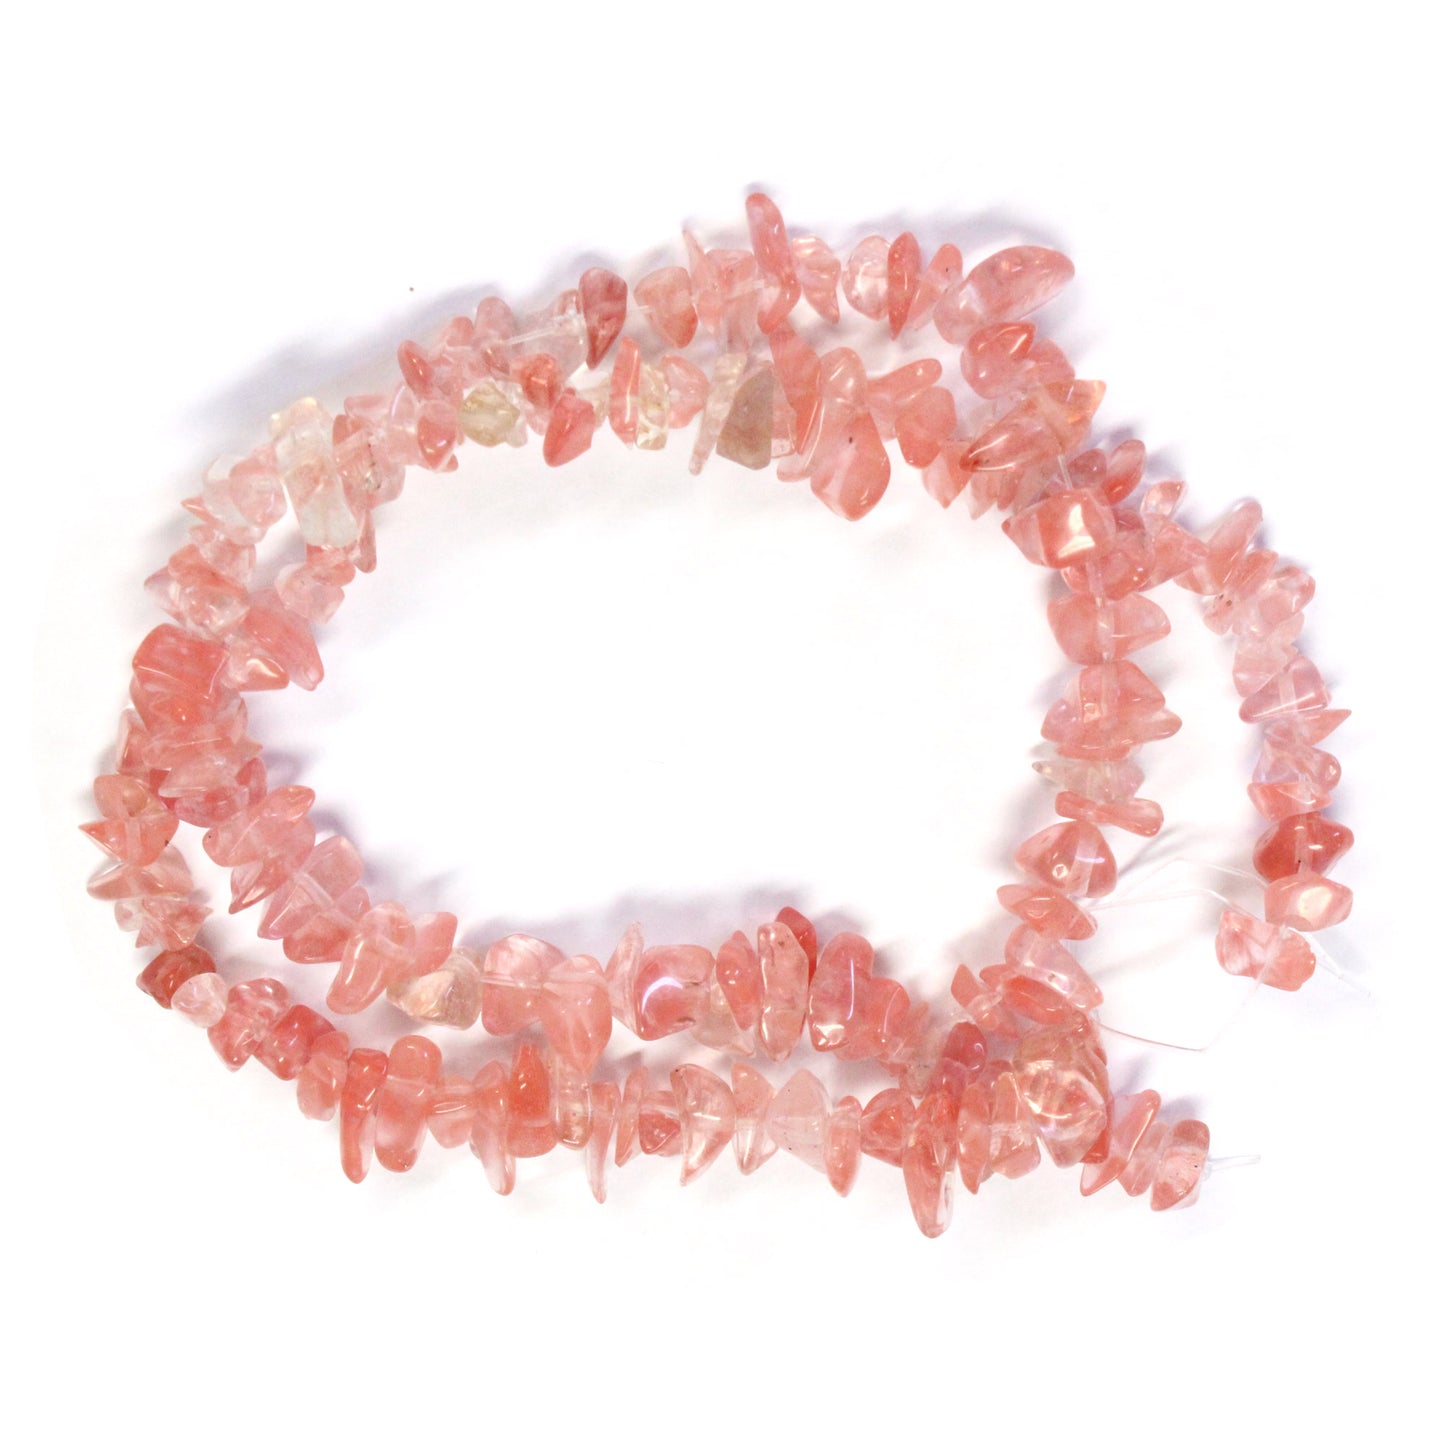 Cherry Quartz Chip Beads / 16 Inch strand / 5-12mm chips / man-made transparent stone jewelry beads